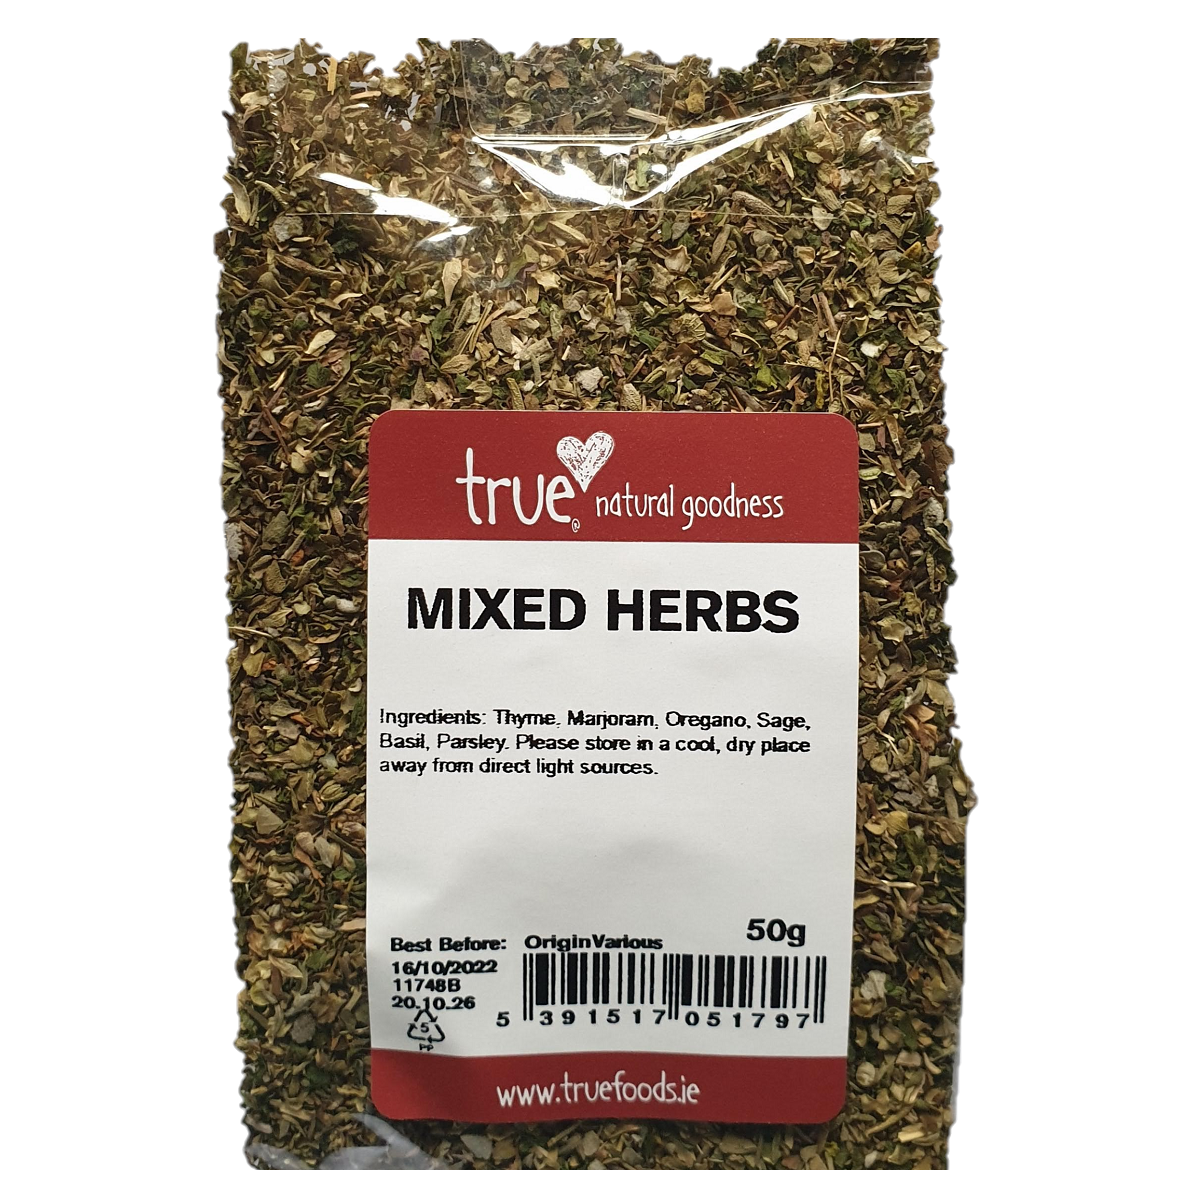 True Natural Goodness Mixed Herbs 50g